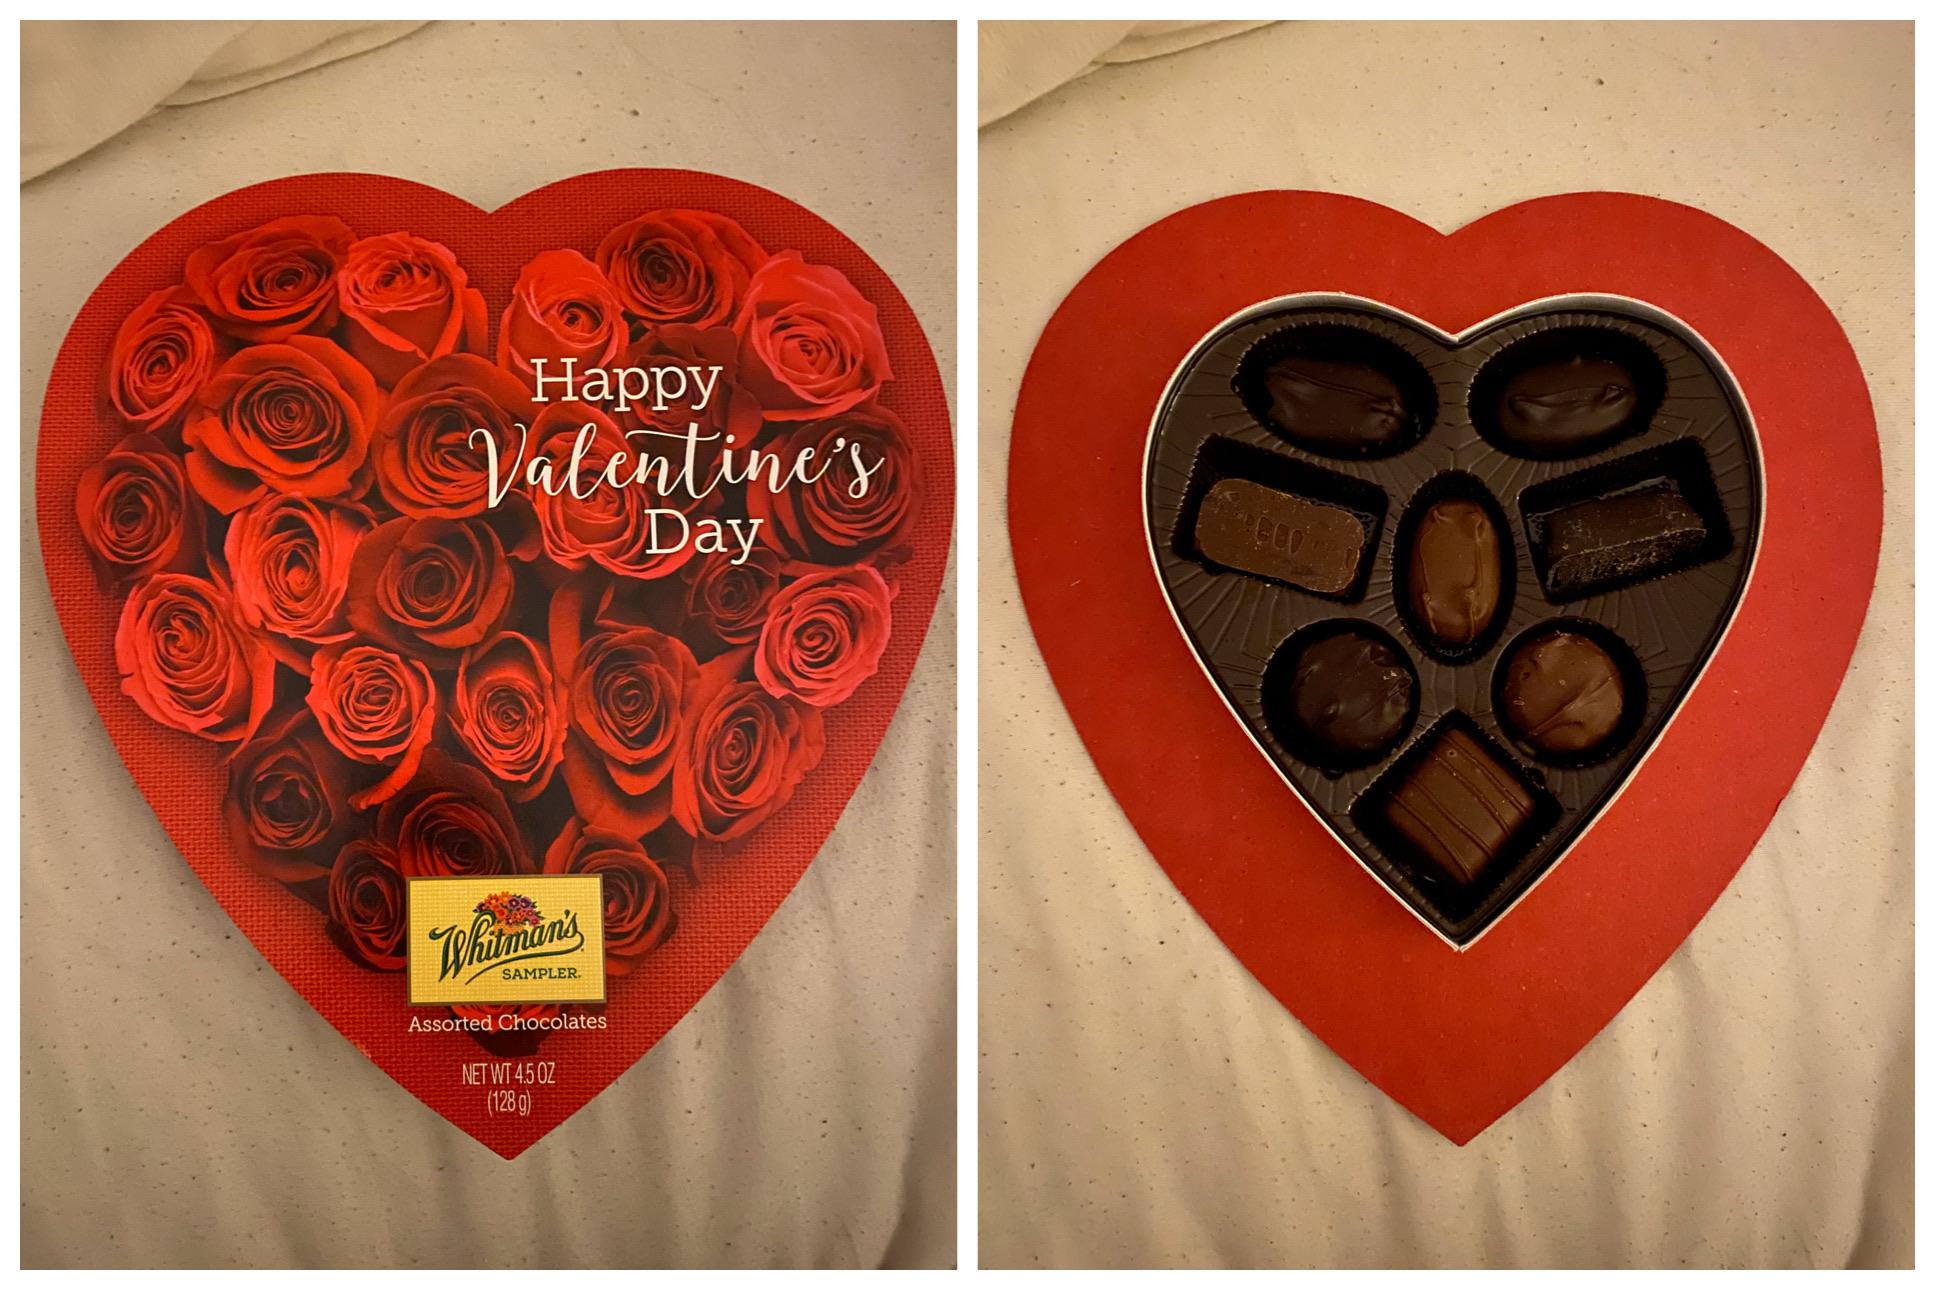 heart - Happy Valentine's Day Whitman's Sampler Assorted Chocolates Net Wt 4.5 Oz 1289